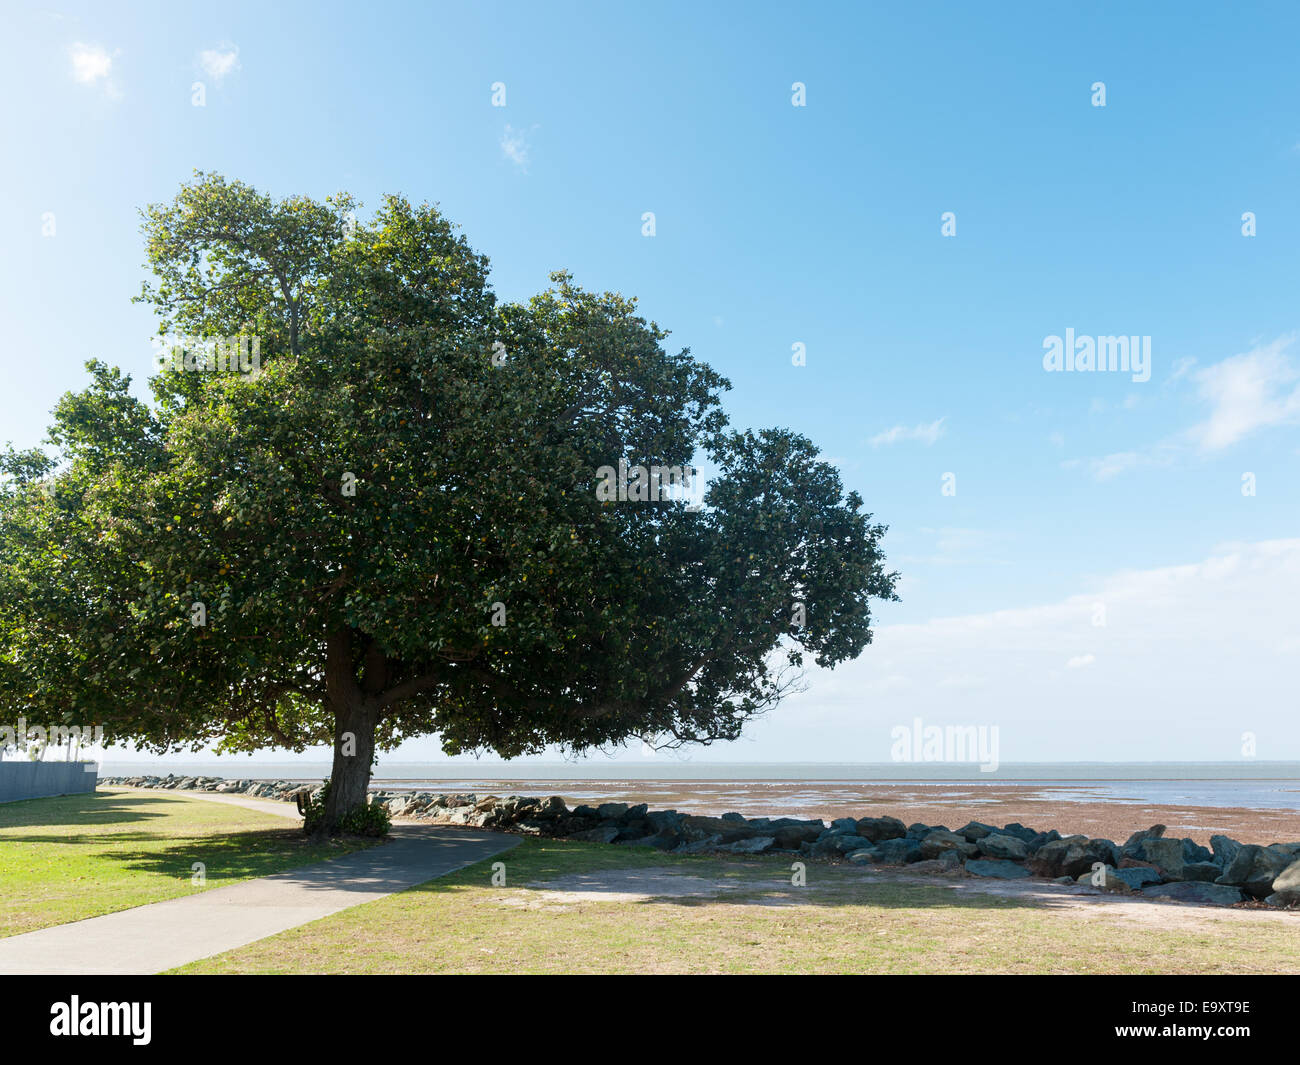 Big green tree grows near the beach Stock Photo